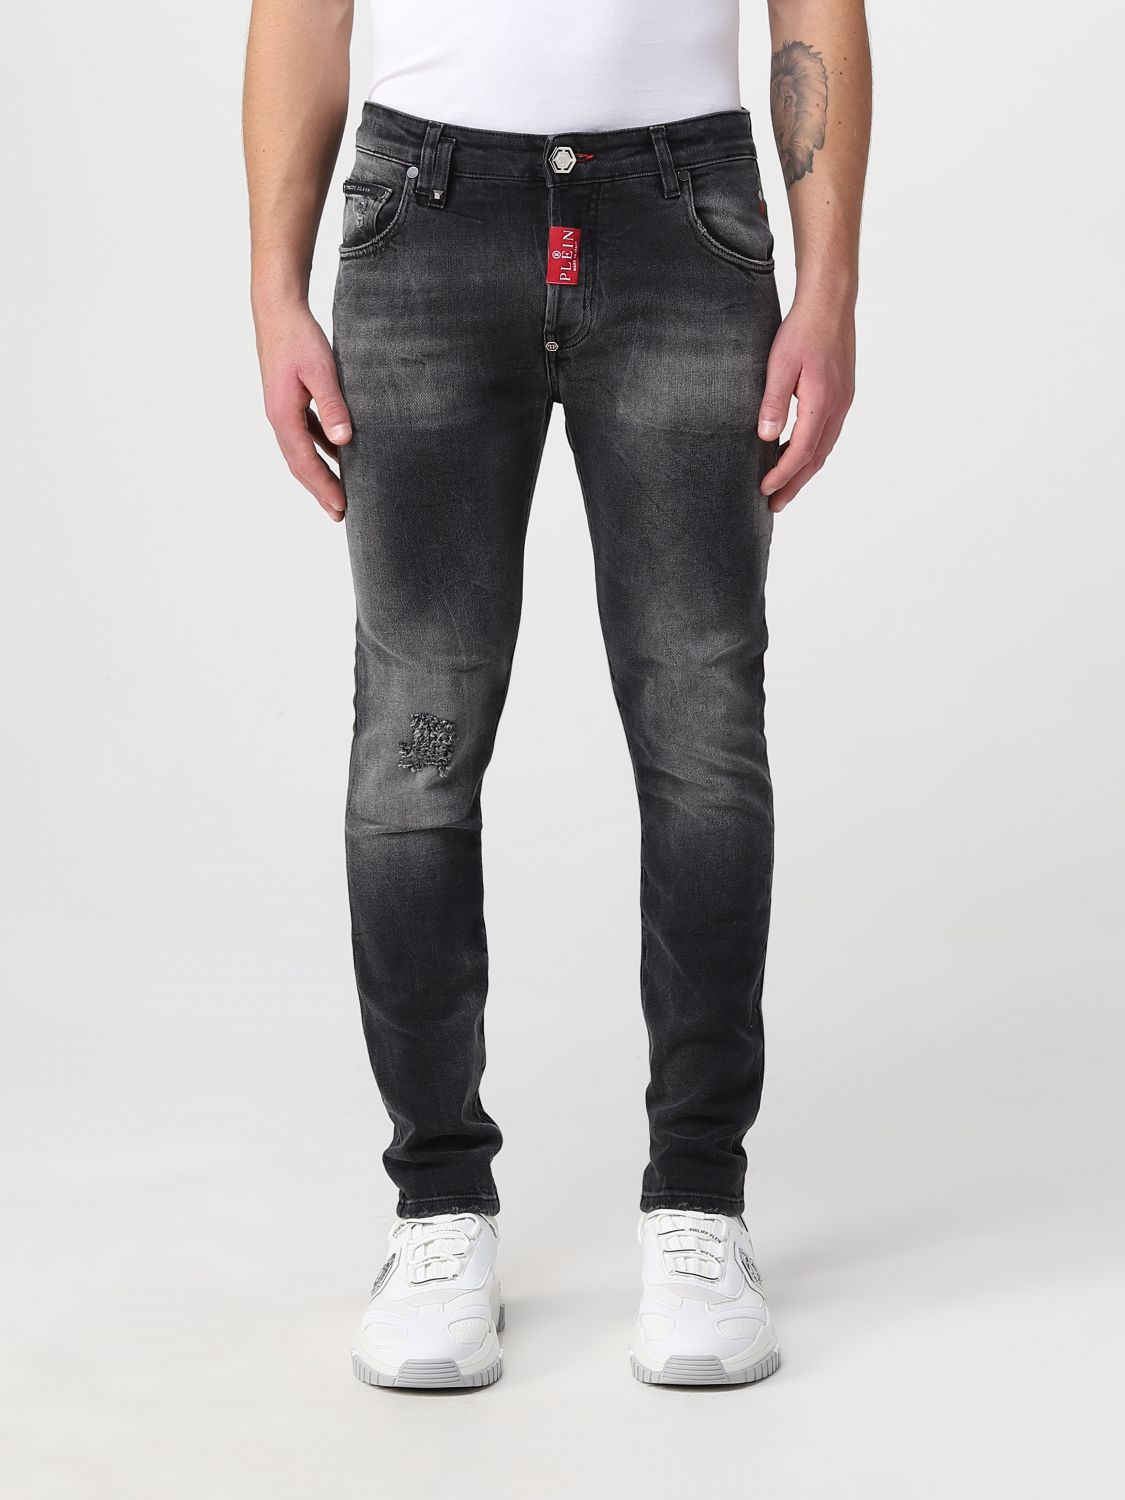 Kapel Fietstaxi Mobiliseren PHILIPP PLEIN: jeans for man - Denim | Philipp Plein jeans  FABCMDT3112PDE004N online on GIGLIO.COM